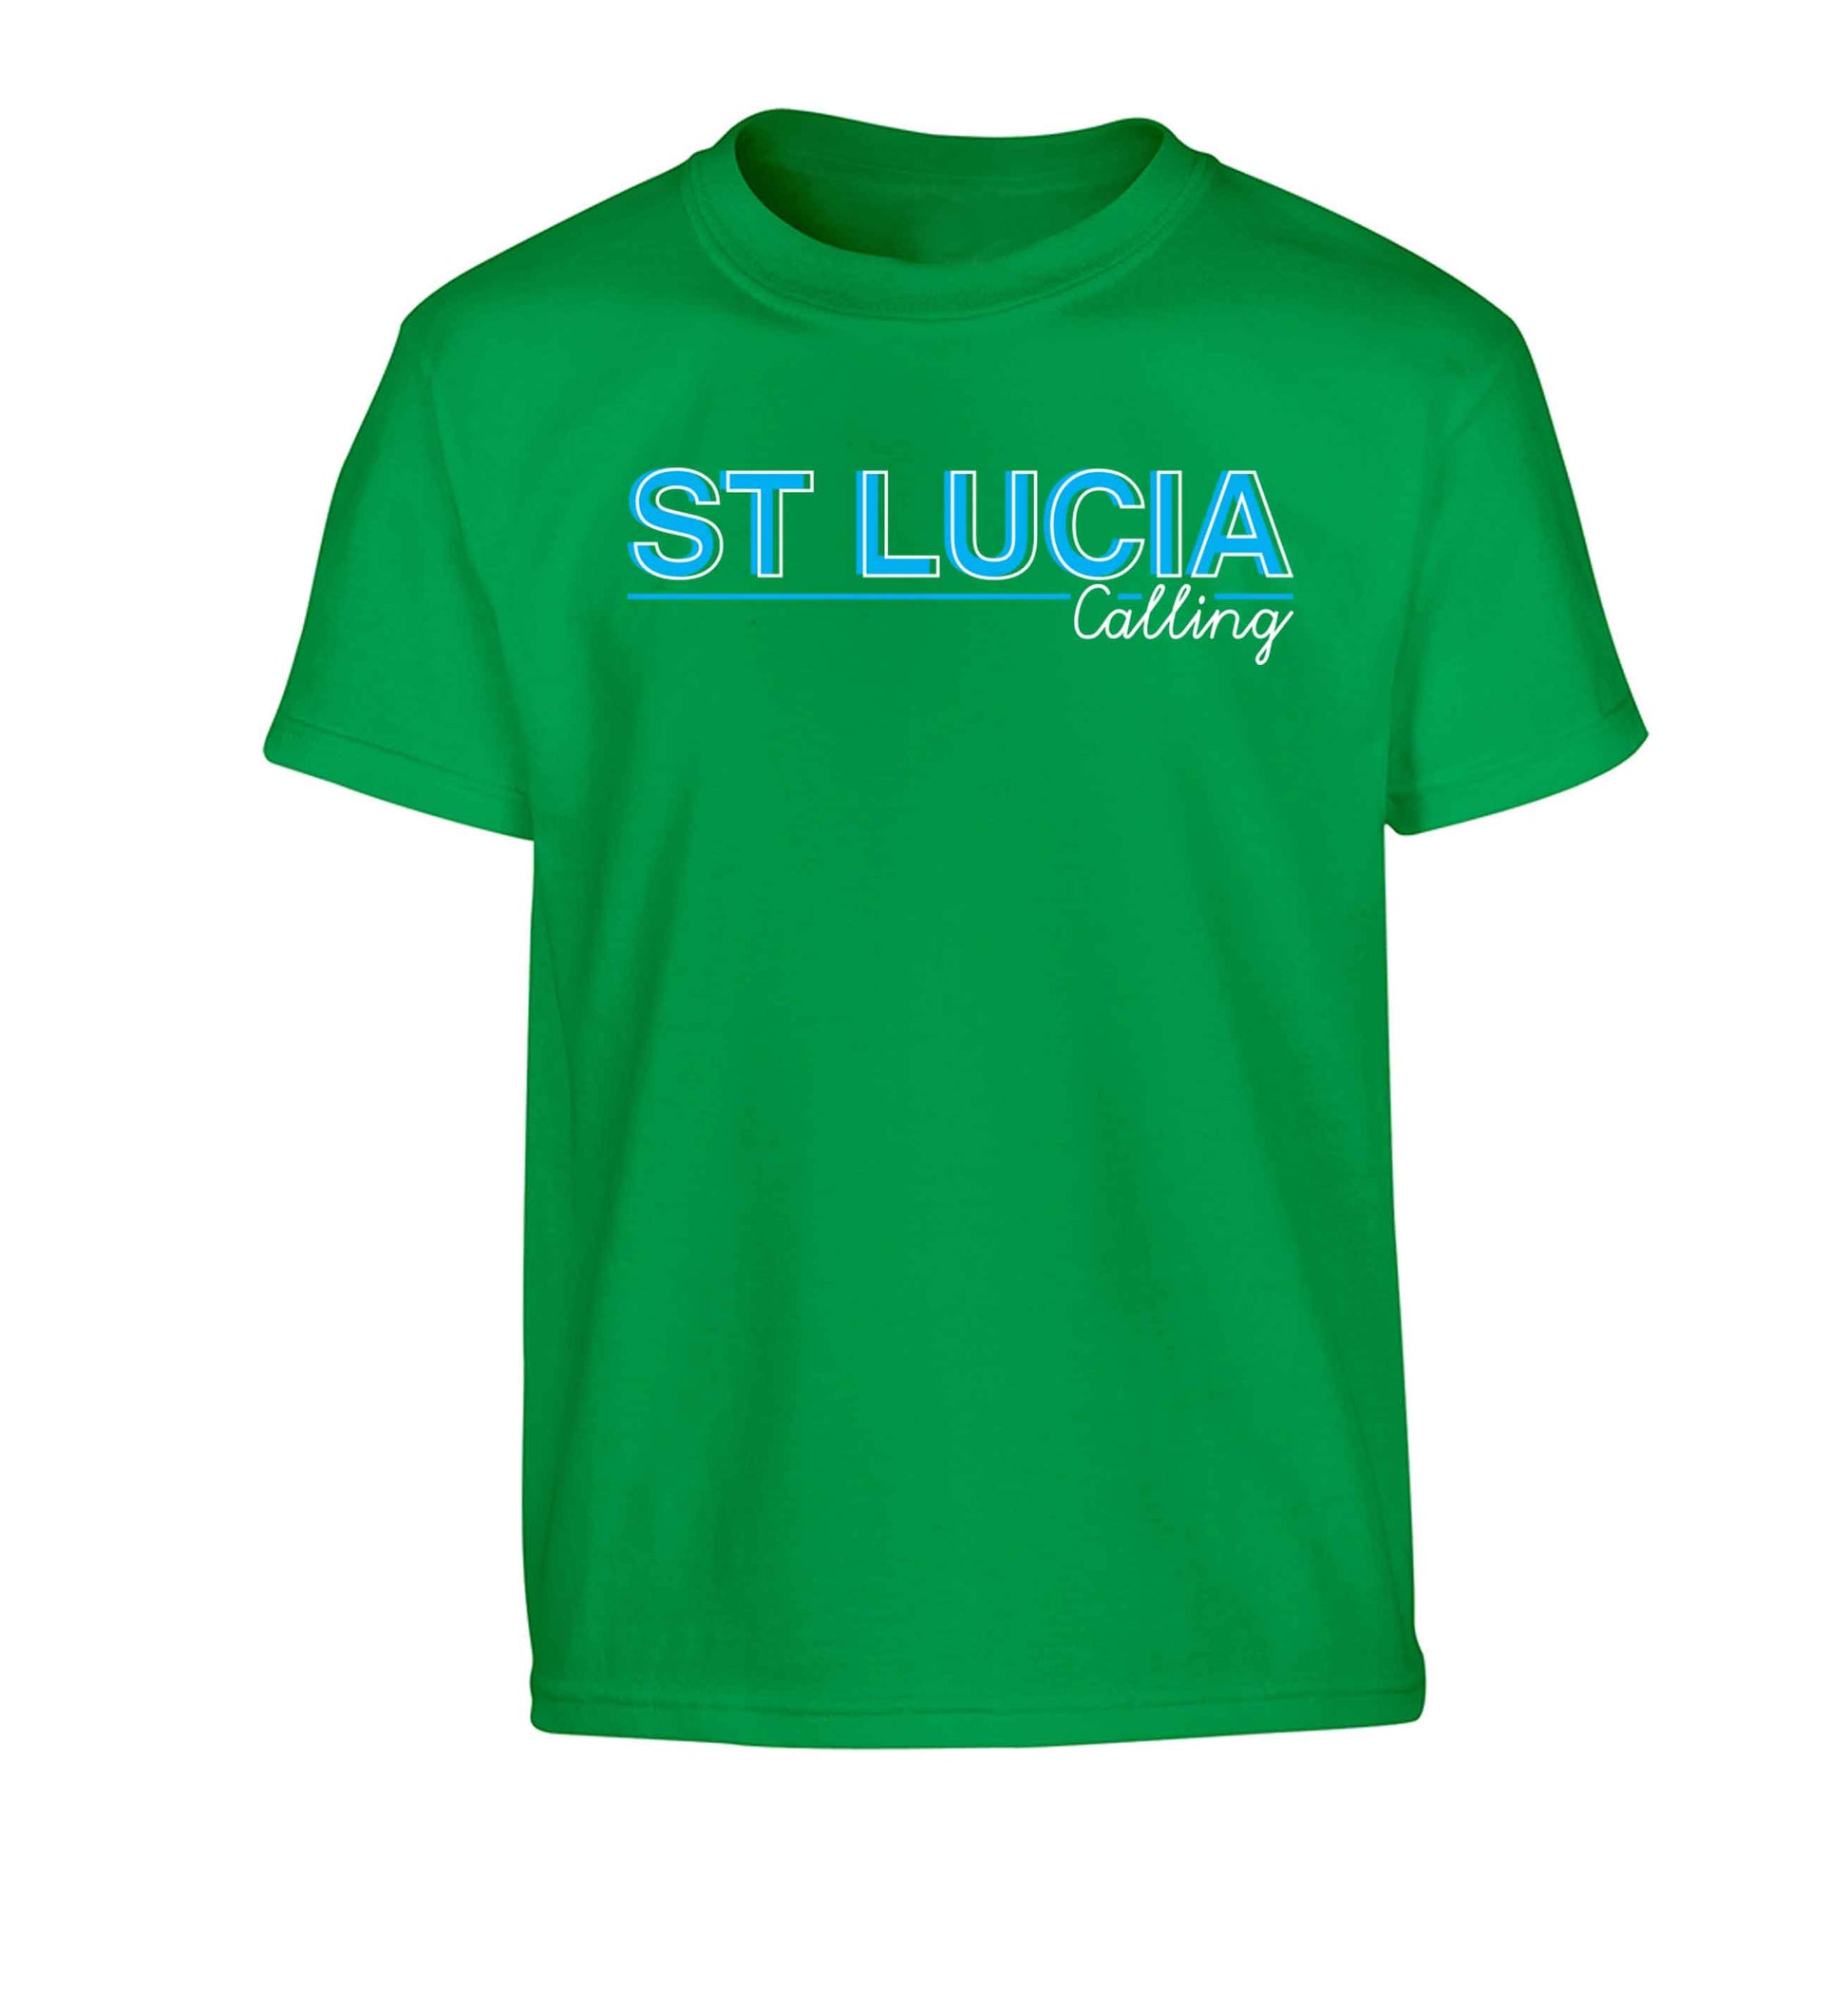 St Lucia calling Children's green Tshirt 12-13 Years